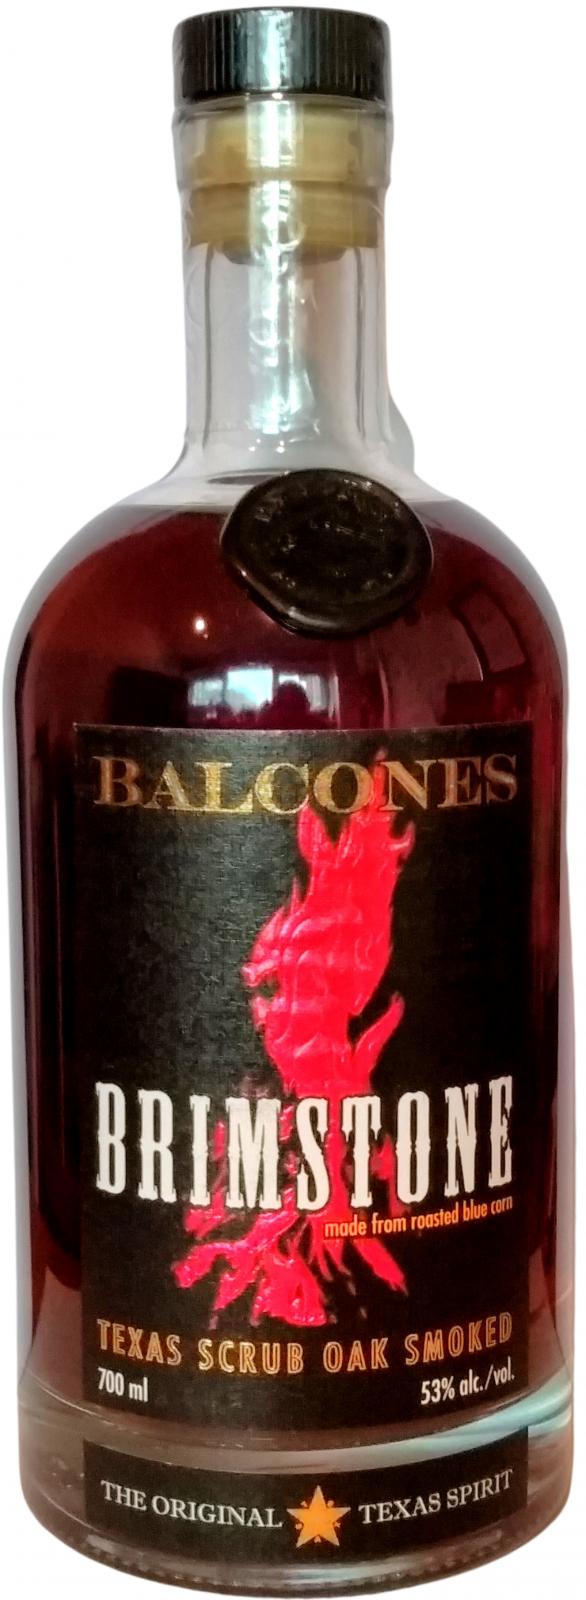 Balcones Brimstone Texas Scrub Oak Smoked BRM 17-4 53% 700ml